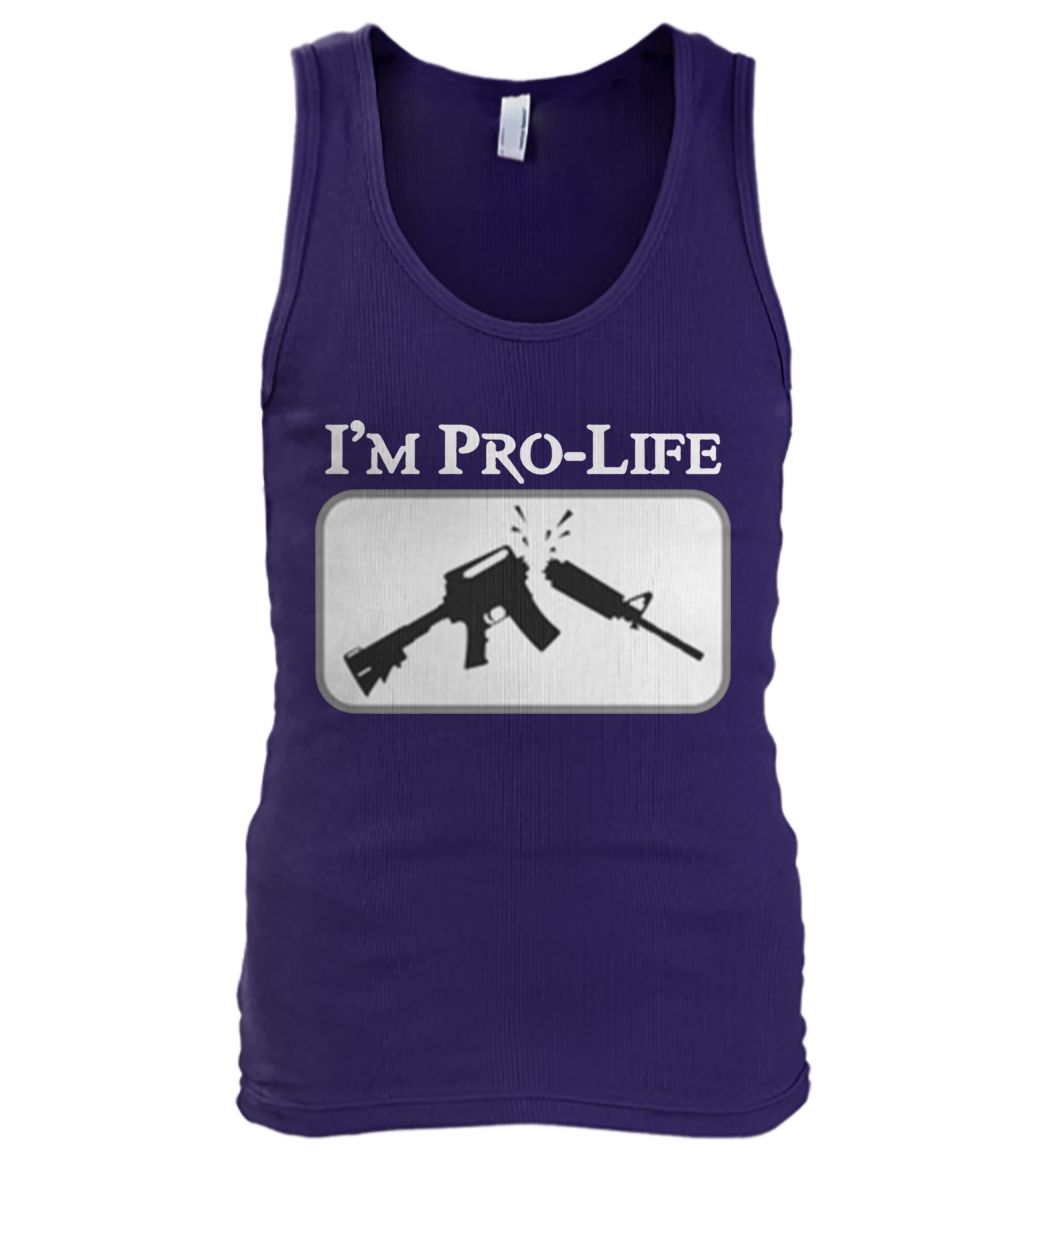 This is pro-life men's tank top